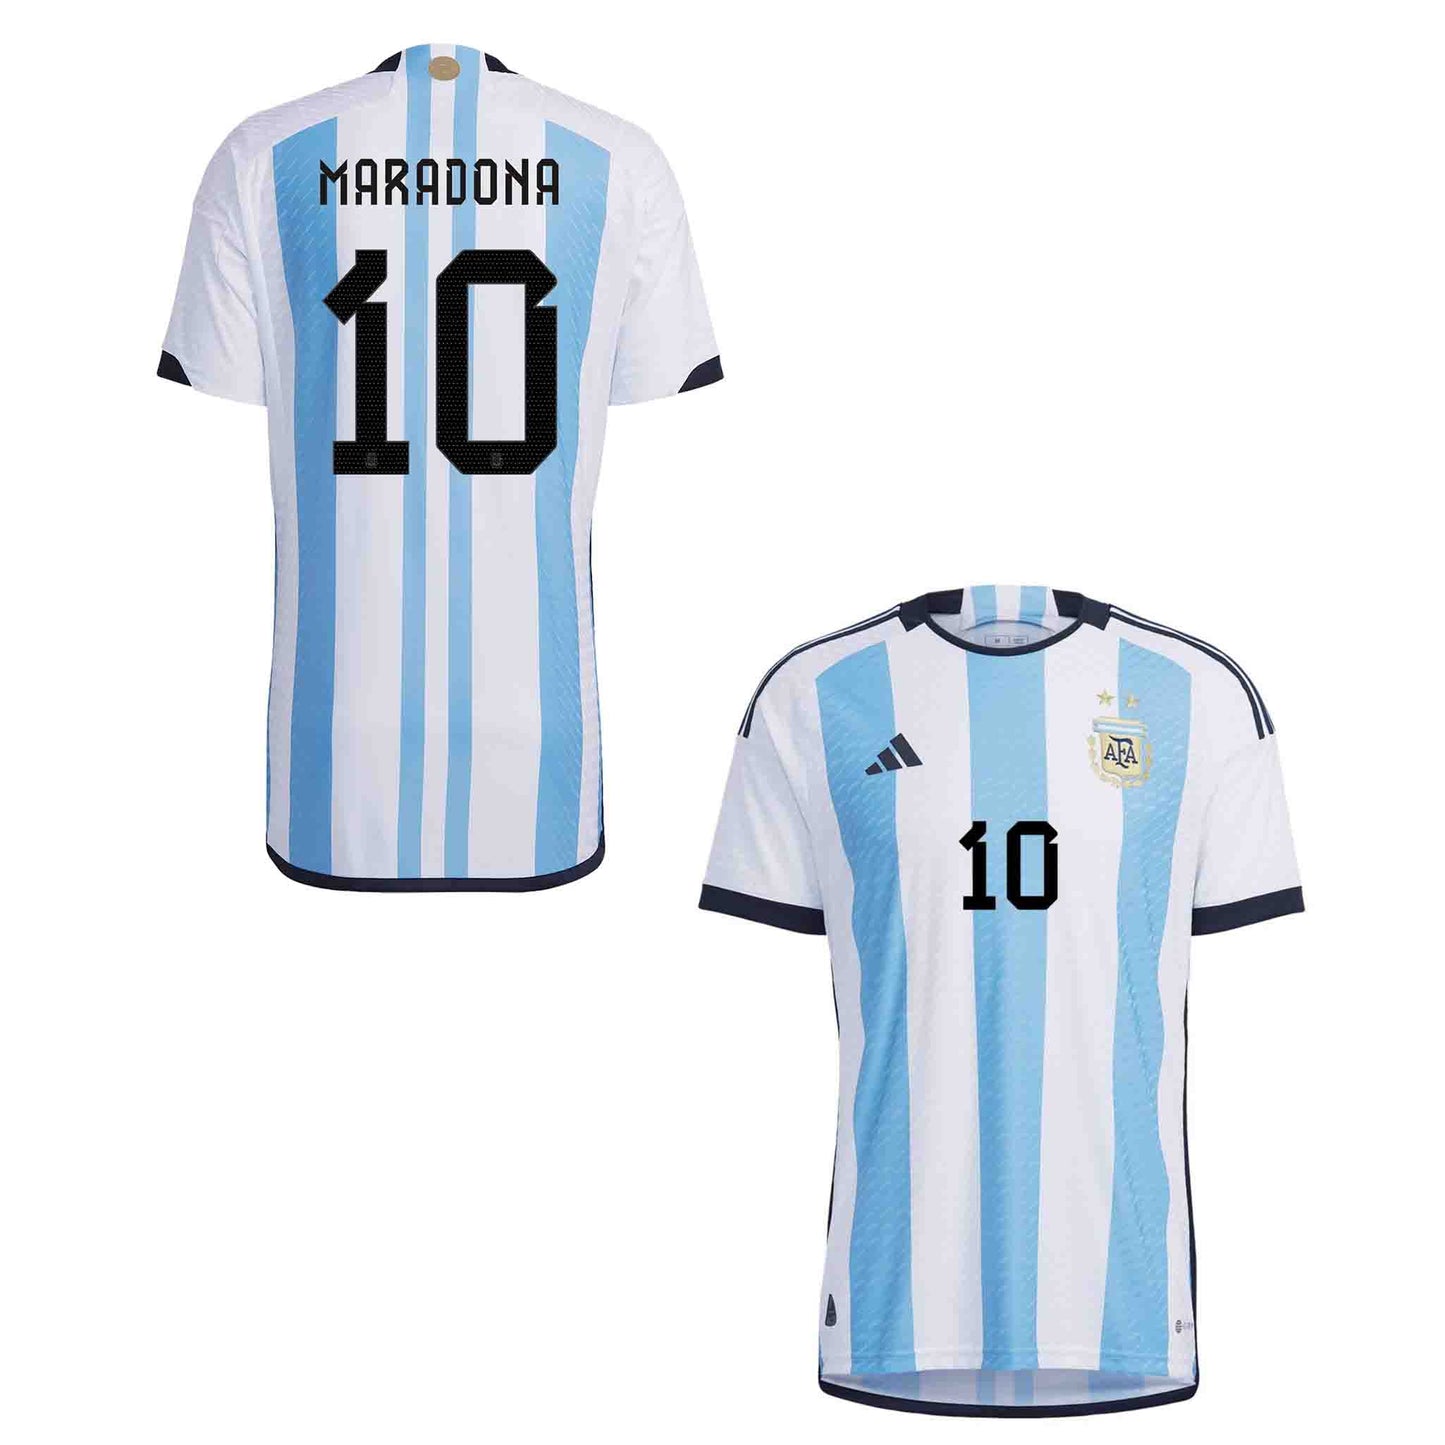 Diego Maradona Argentina 10 Jersey